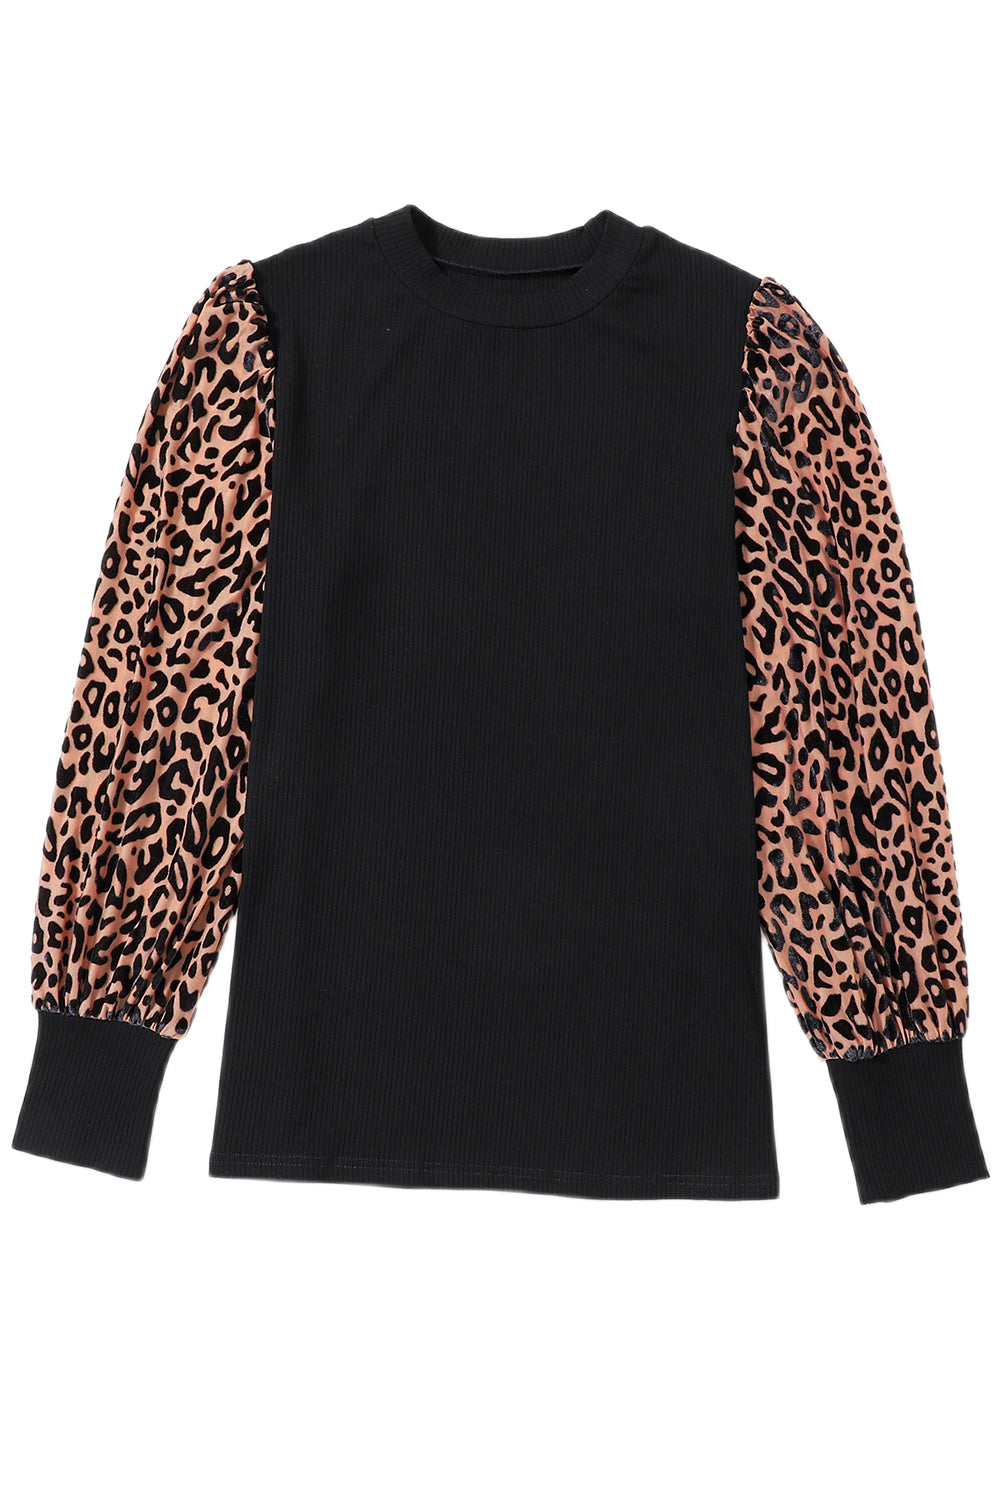 Black Leopard Print Long Sleeve Ribbed Knit Blouse